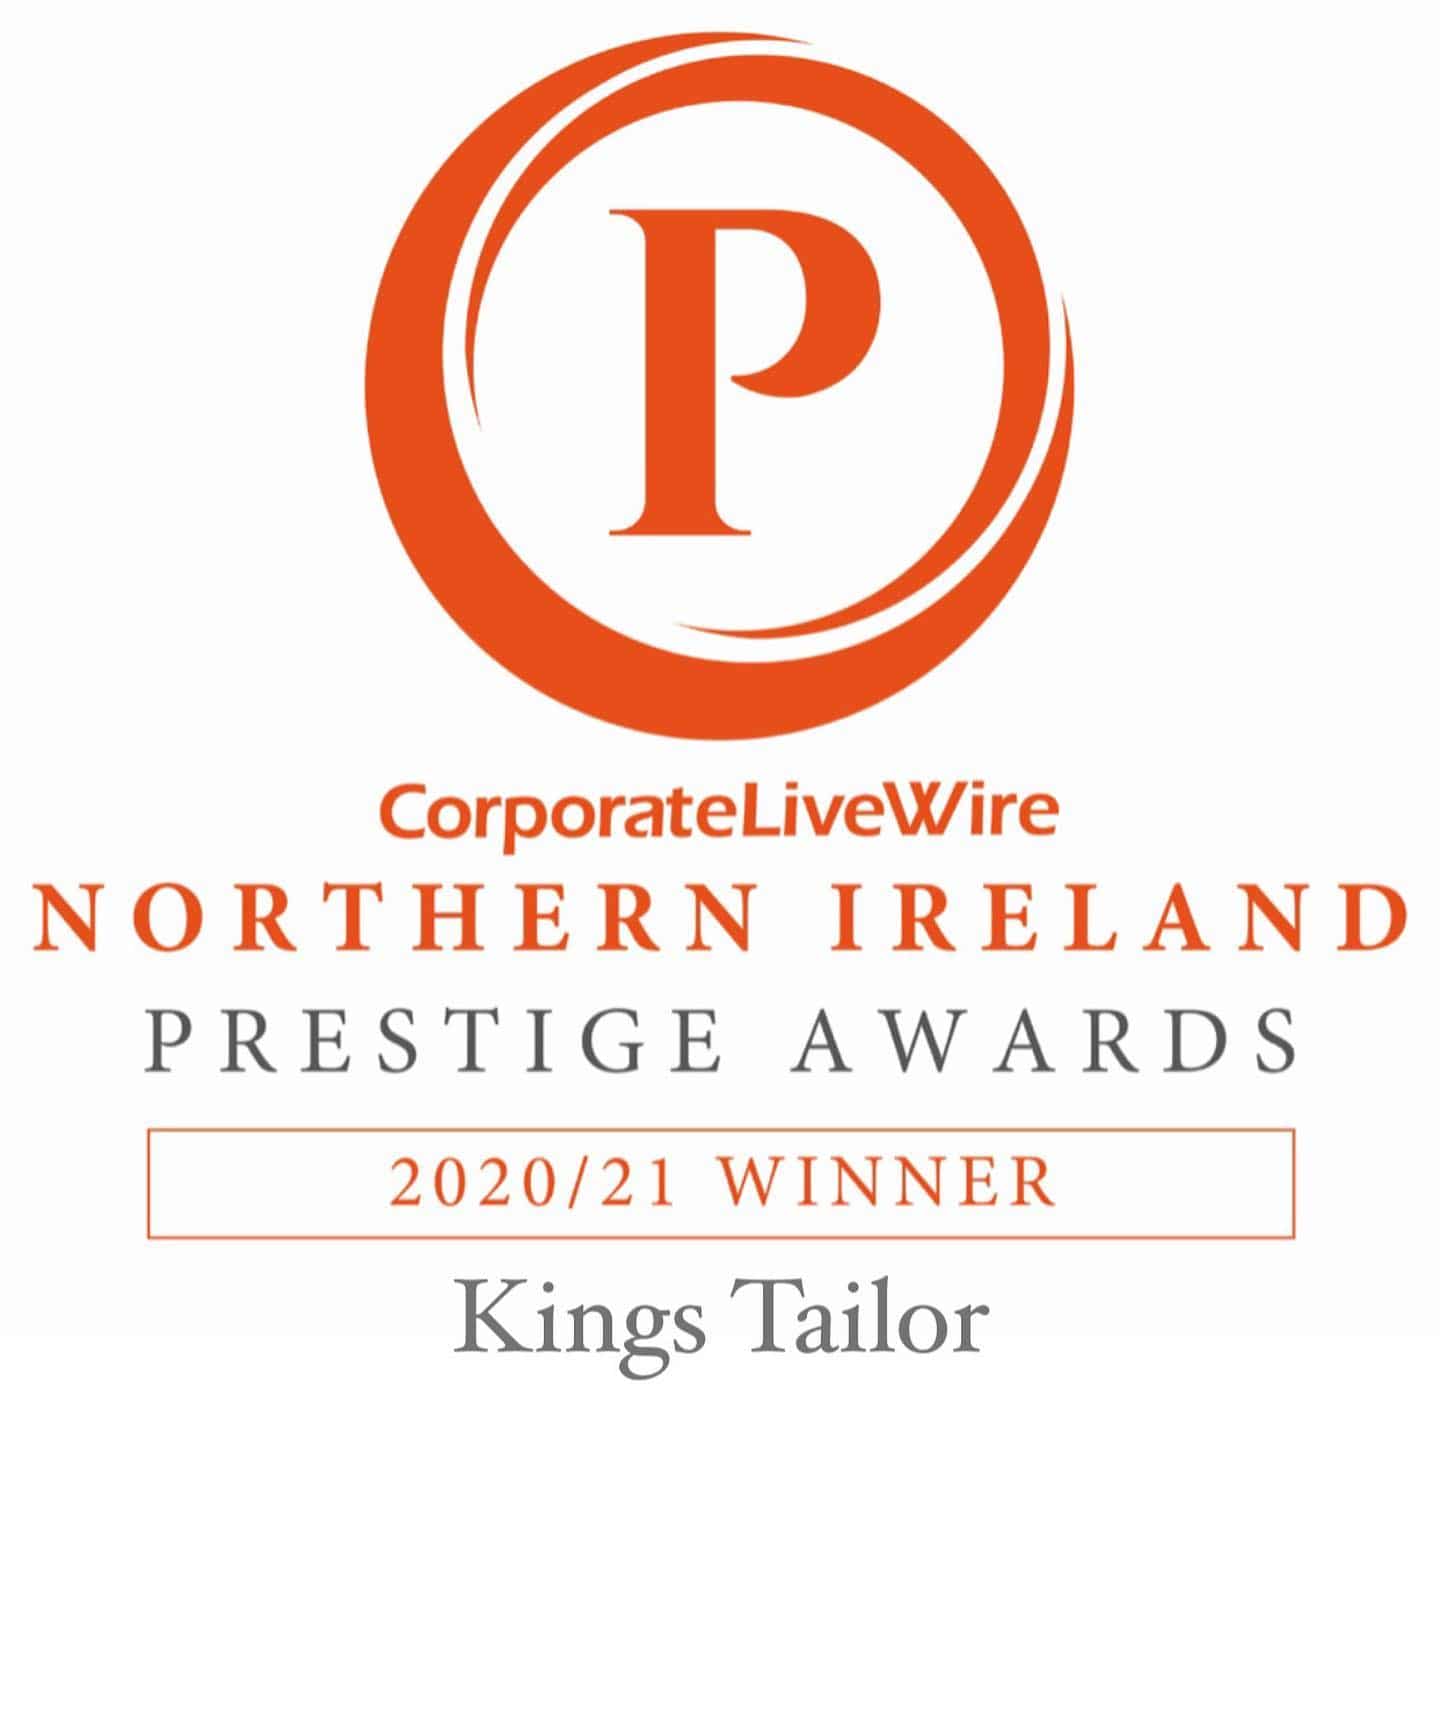 Northern Ireland Prestige Awards - Kings Tailor